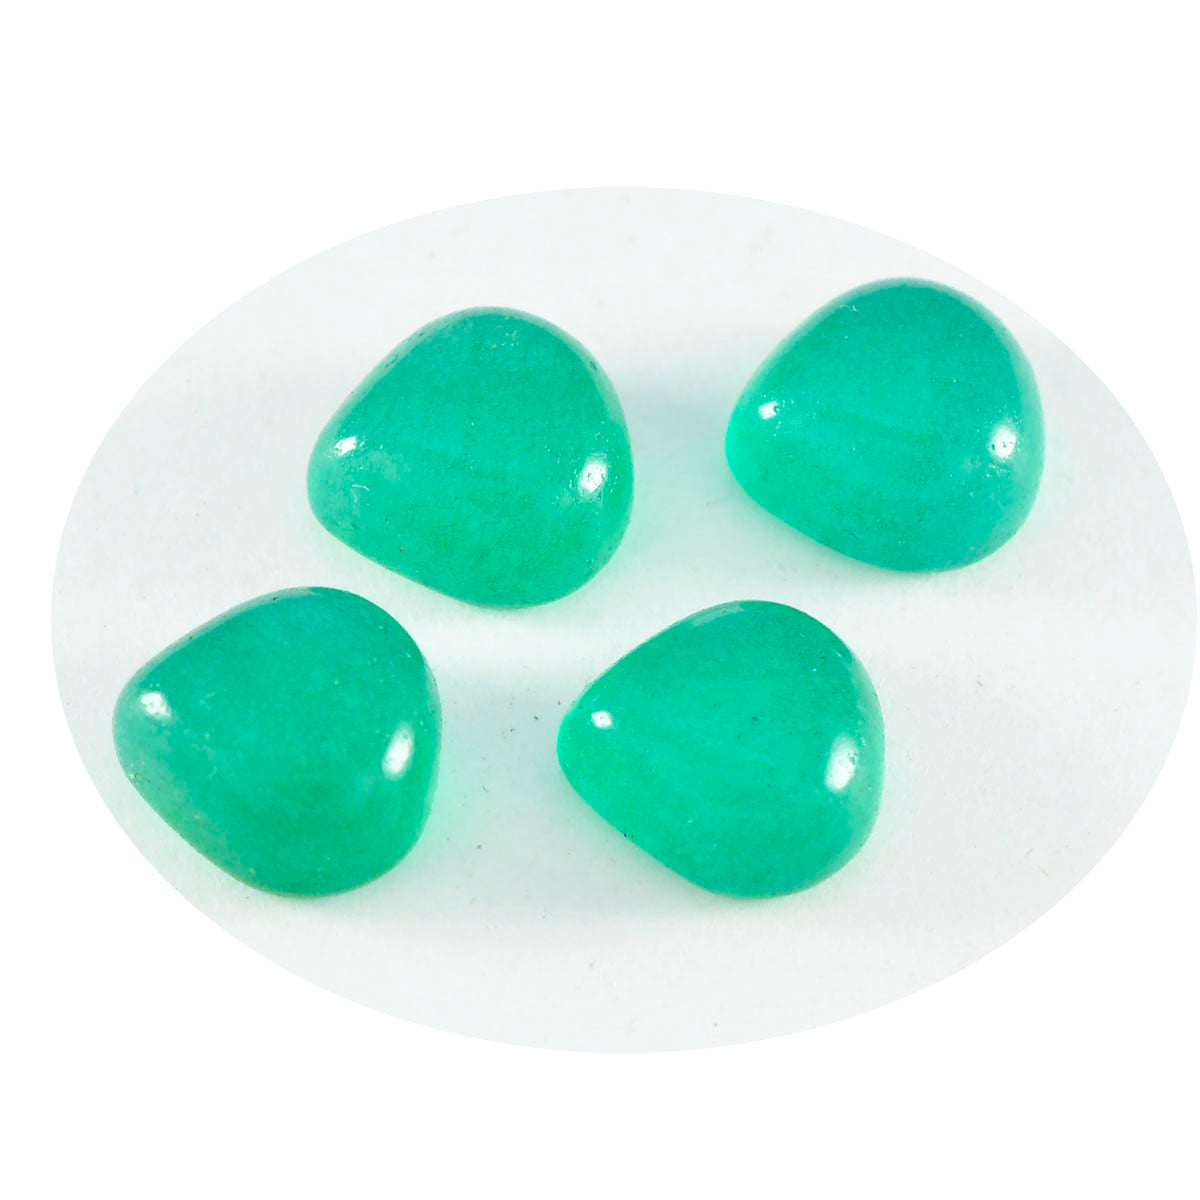 Riyogems 1PC Green Onyx Cabochon 10x10 mm Heart Shape startling Quality Stone